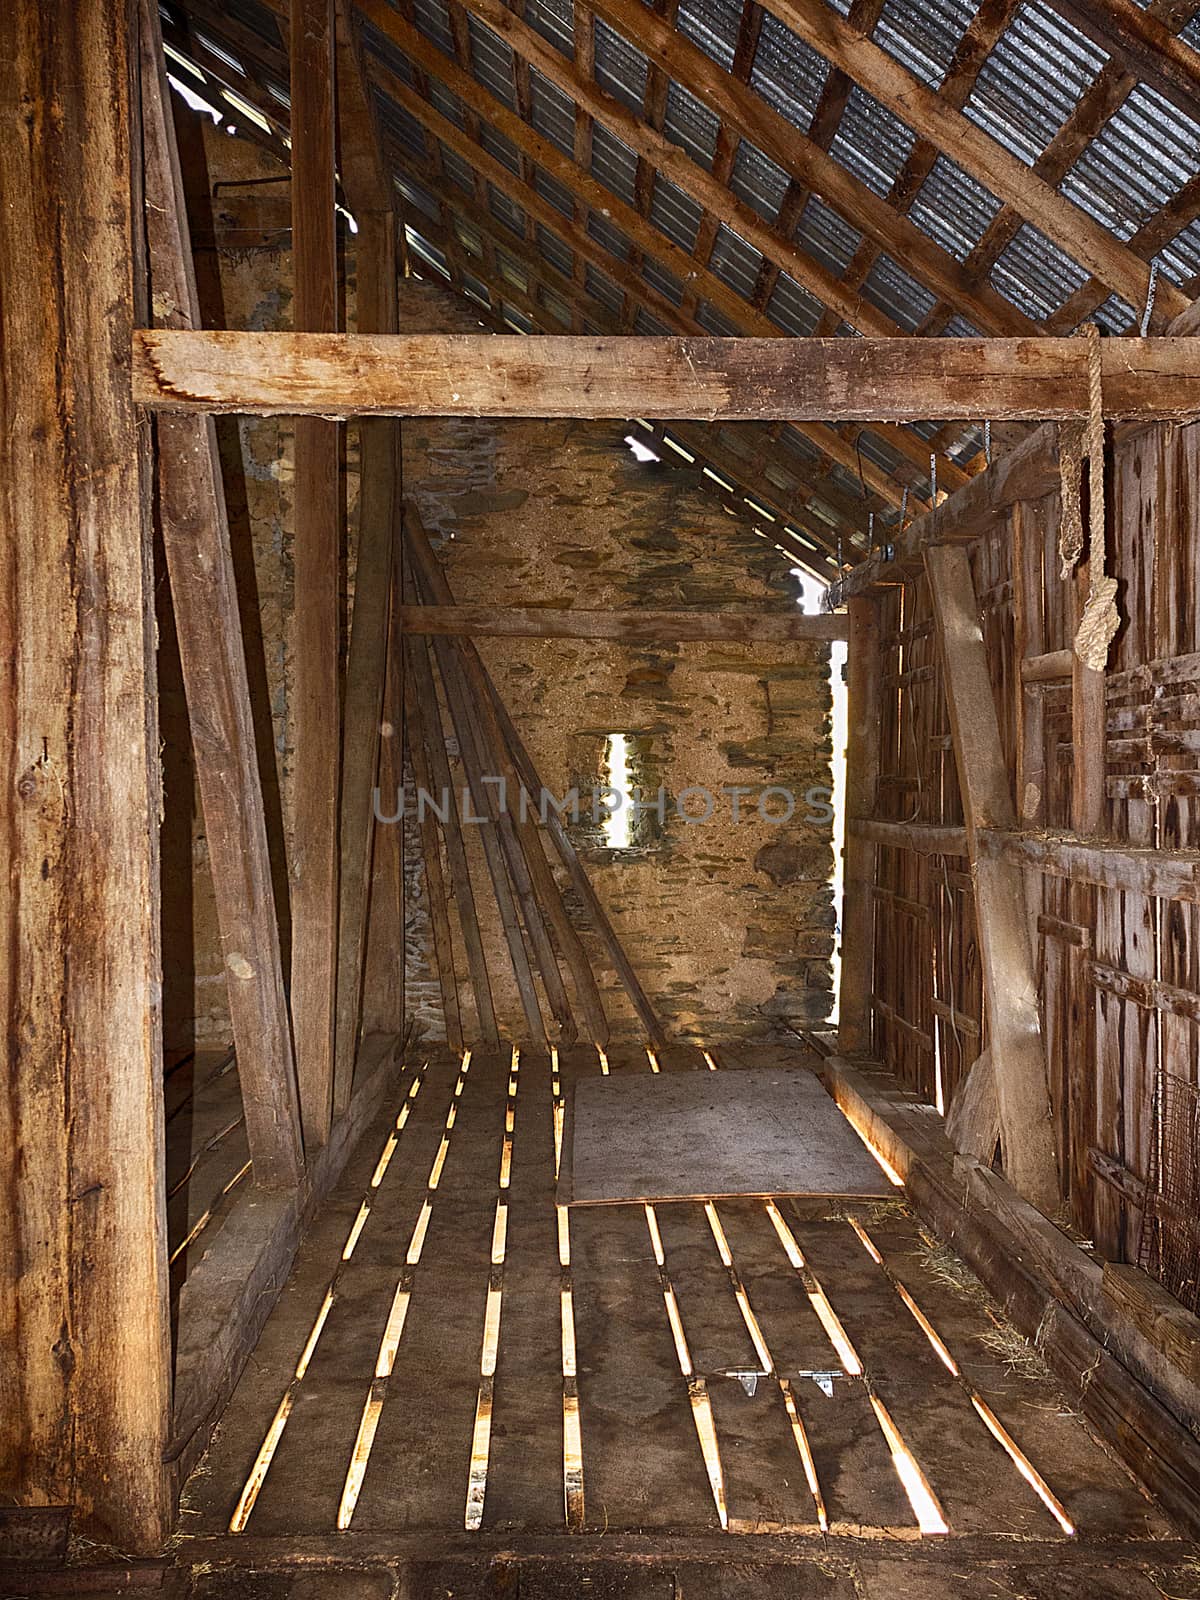 Interior view of bank barn by CharlieFloyd